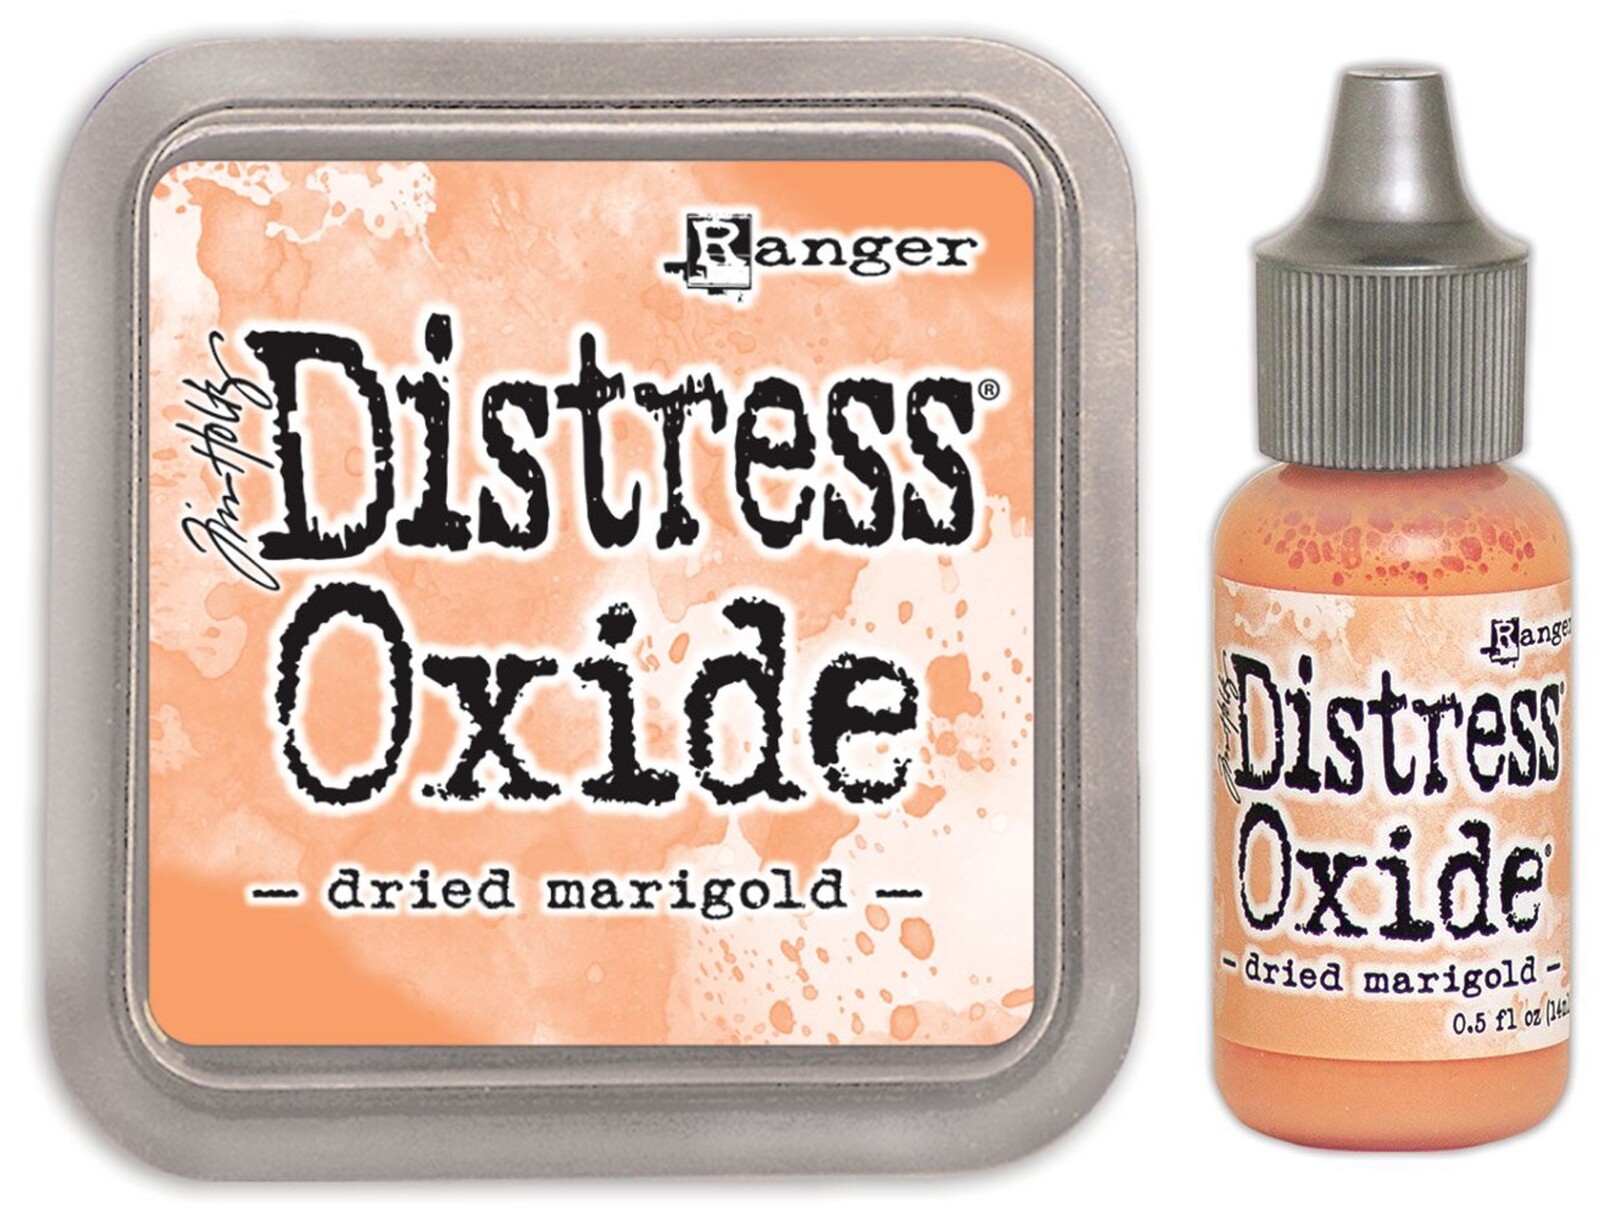 Tim Holtz Distress Oxide Ink Pad + Reinker Dried Marigold